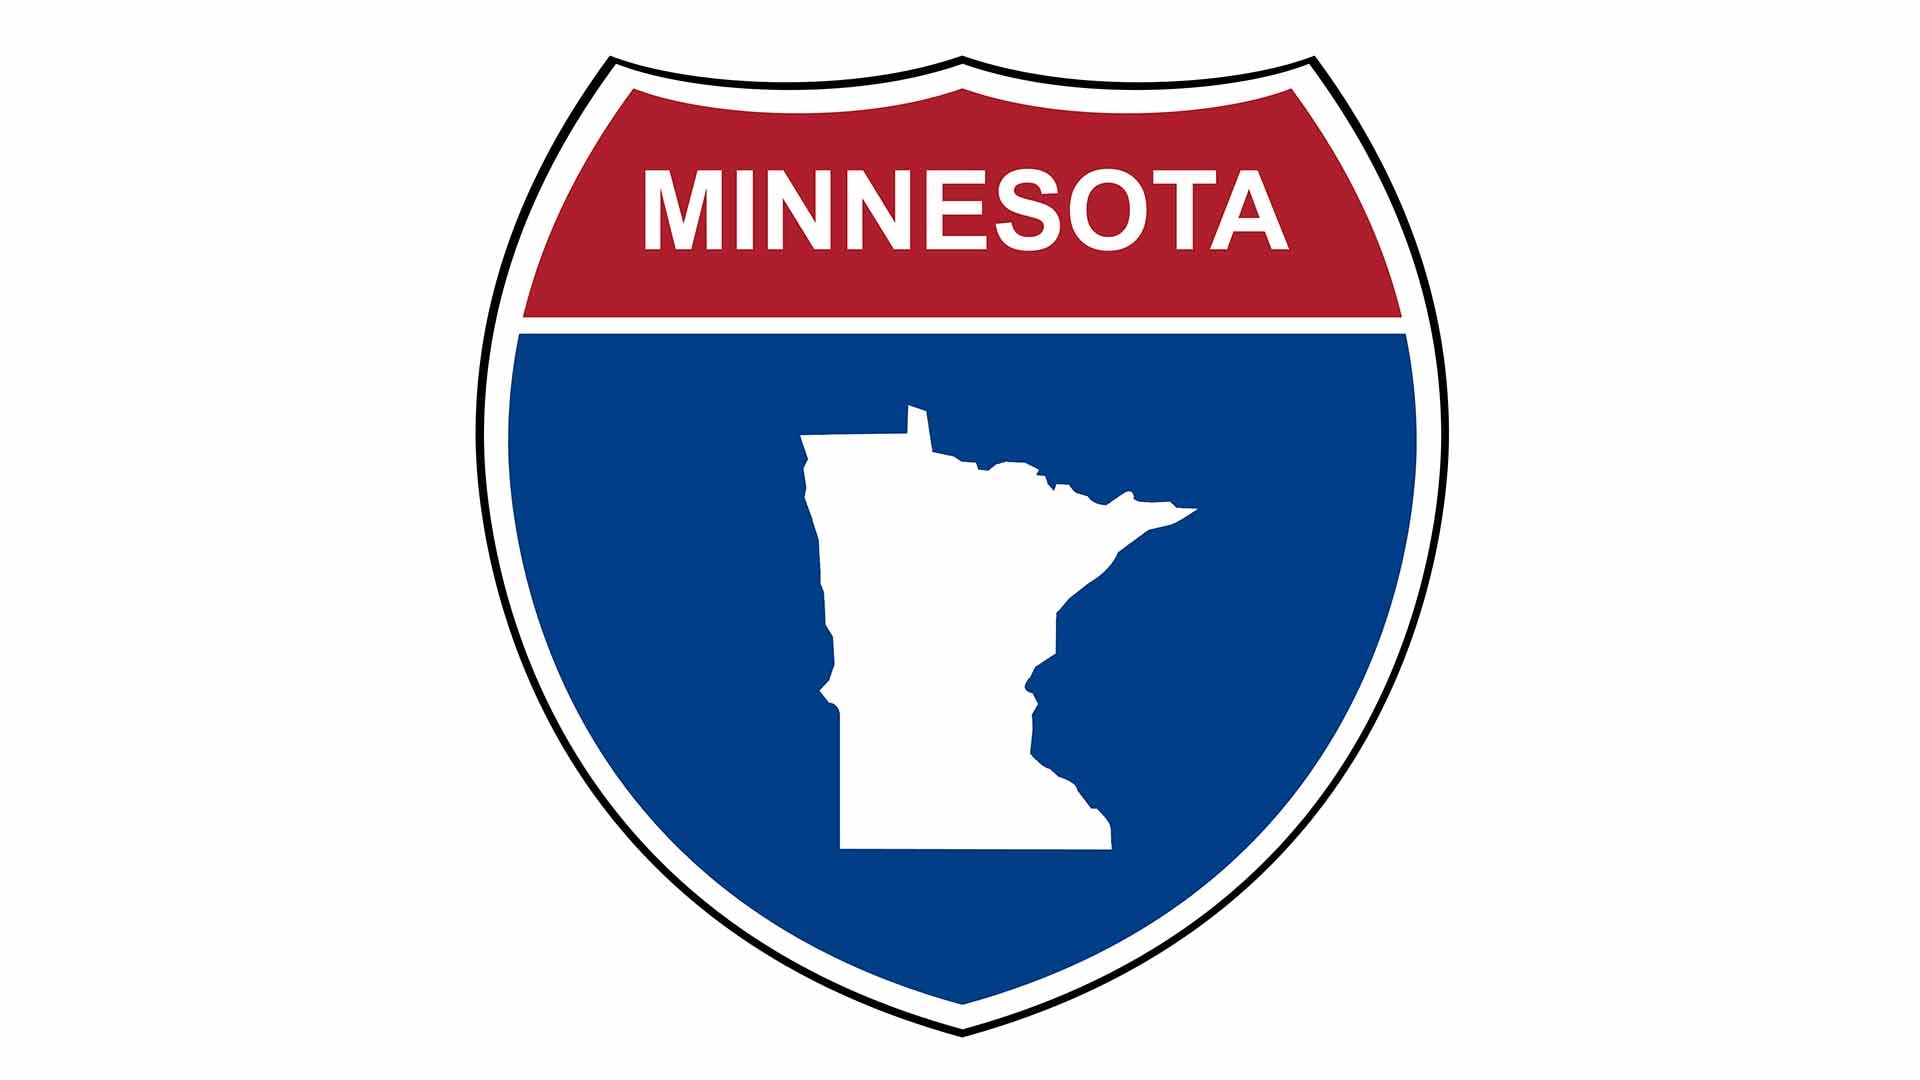 Minnesota state roadside sign